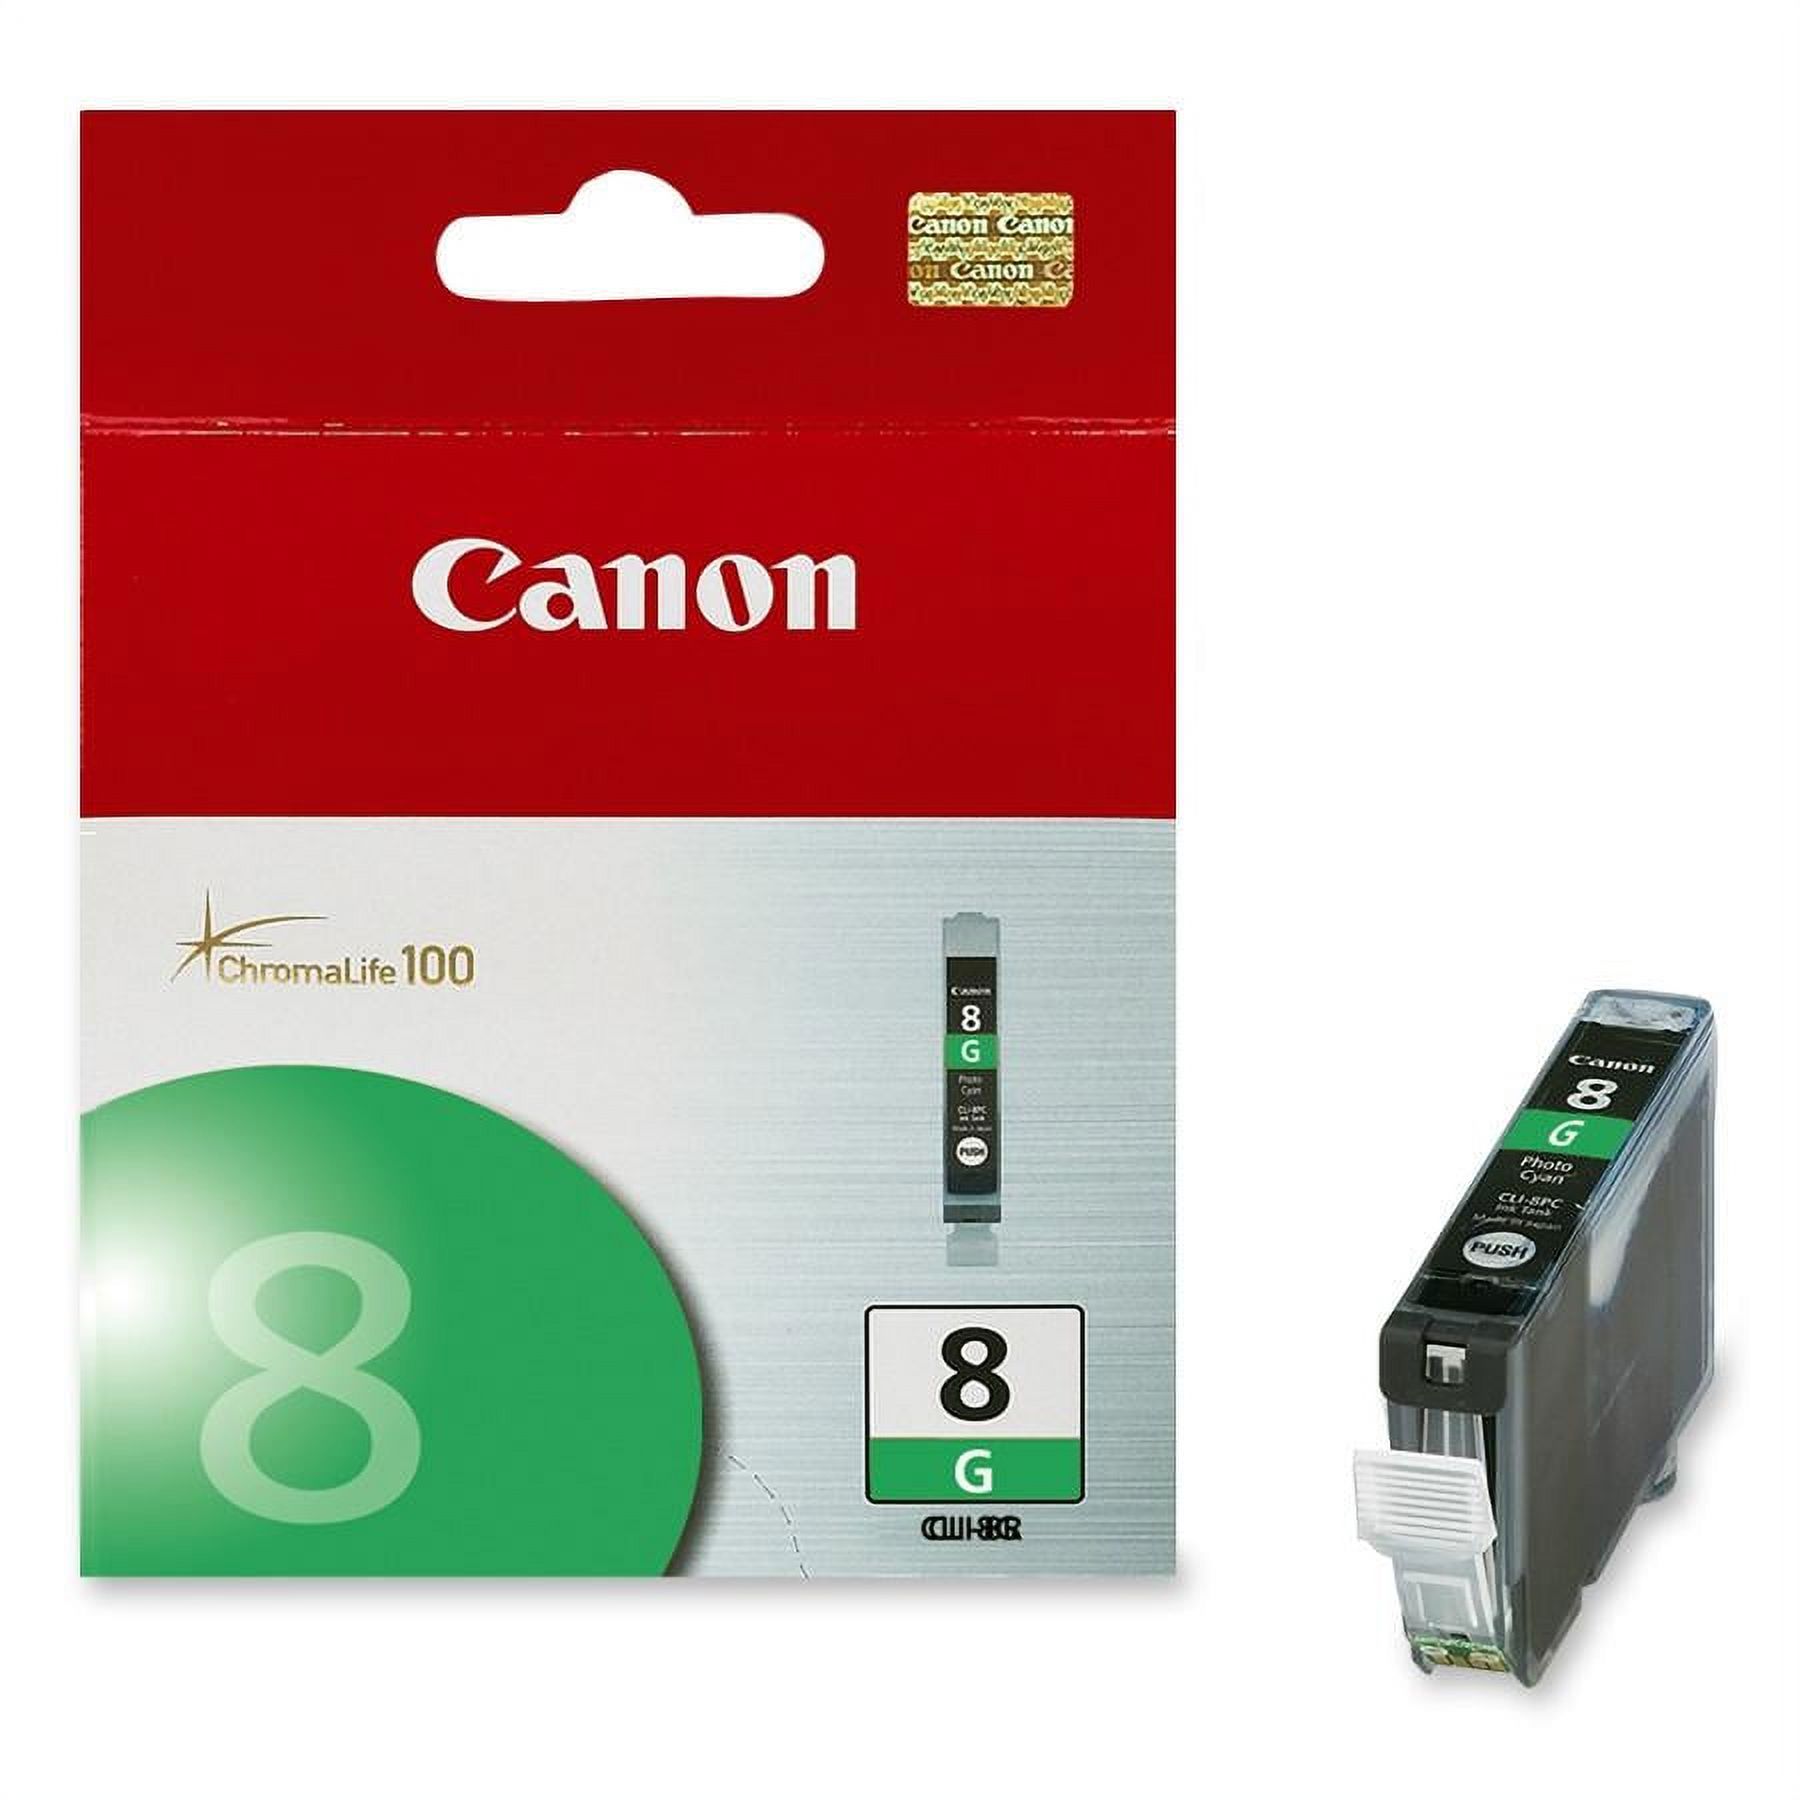 CANON PIXMA PRO9000 Cartridge (280 yield) - image 2 of 2